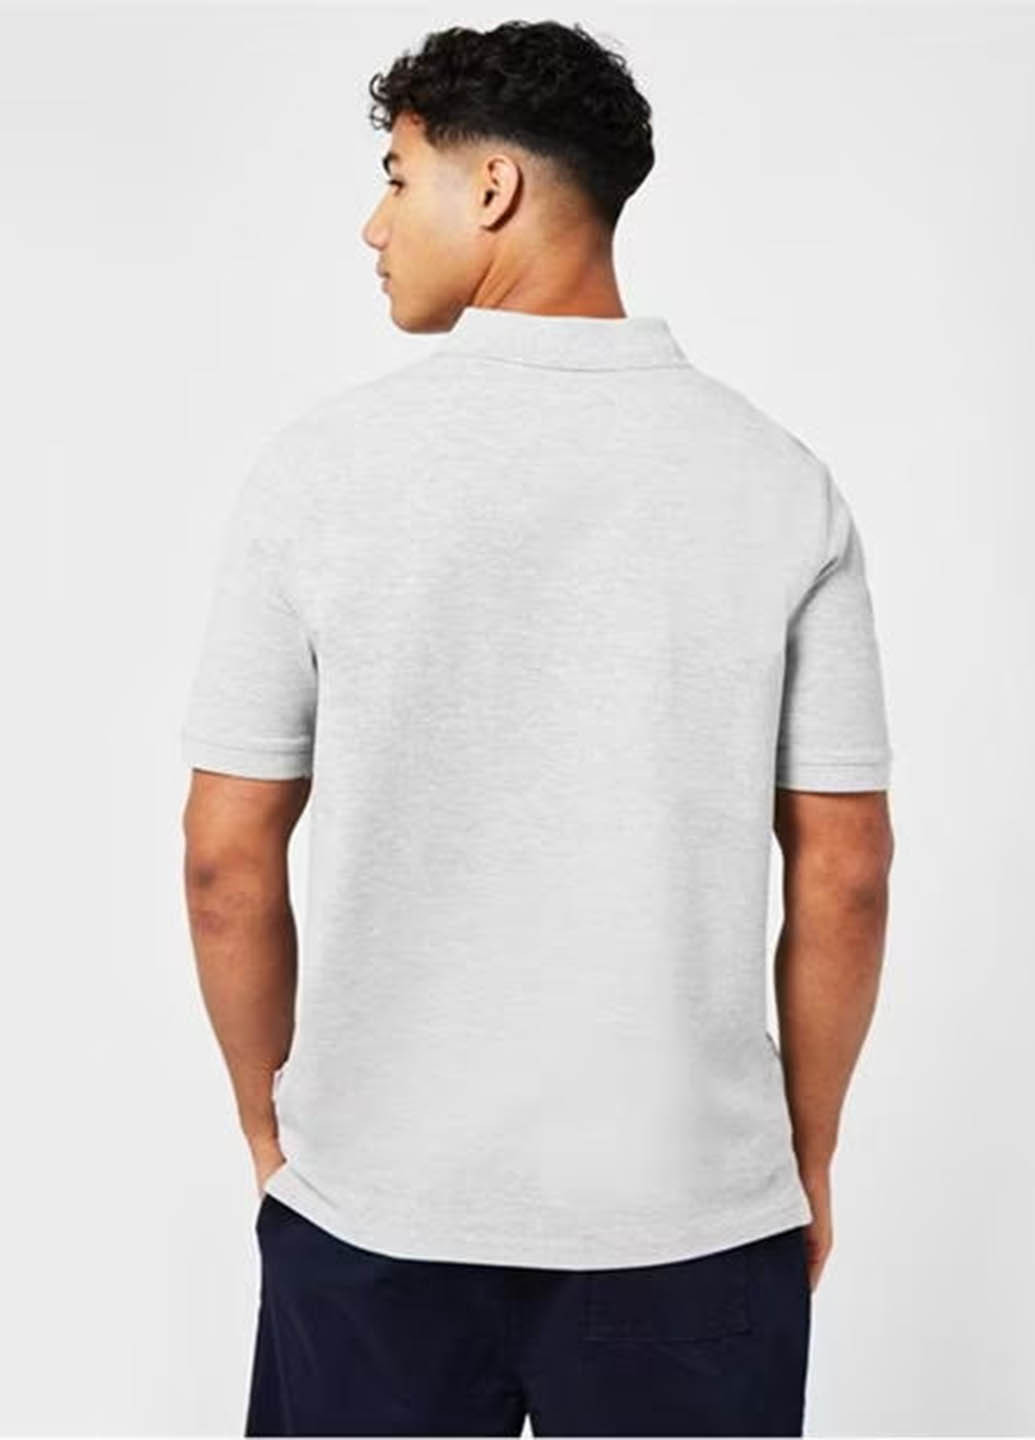 Светло-серая футболка-поло для мужчин Soulcal & Co меланжевая